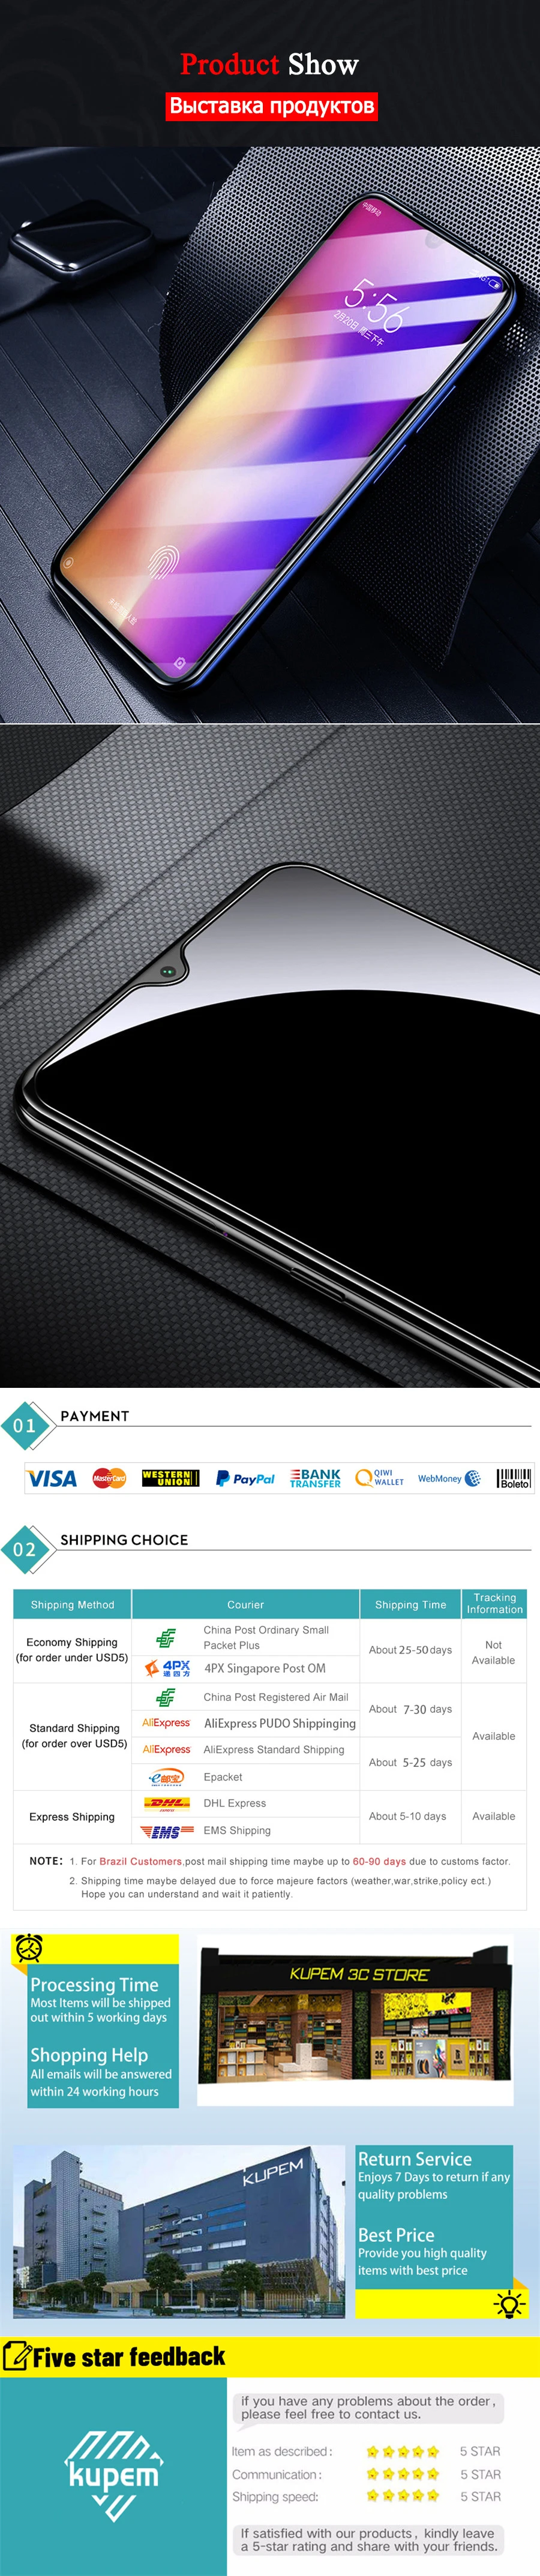 3 шт. Защитная пленка для экрана для Xiaomi mi 9 Se 9t Pro, закаленное стекло для Xiaomi mi A3 8 A2 Lite A1 mi x 3 Cc9 E, пленка